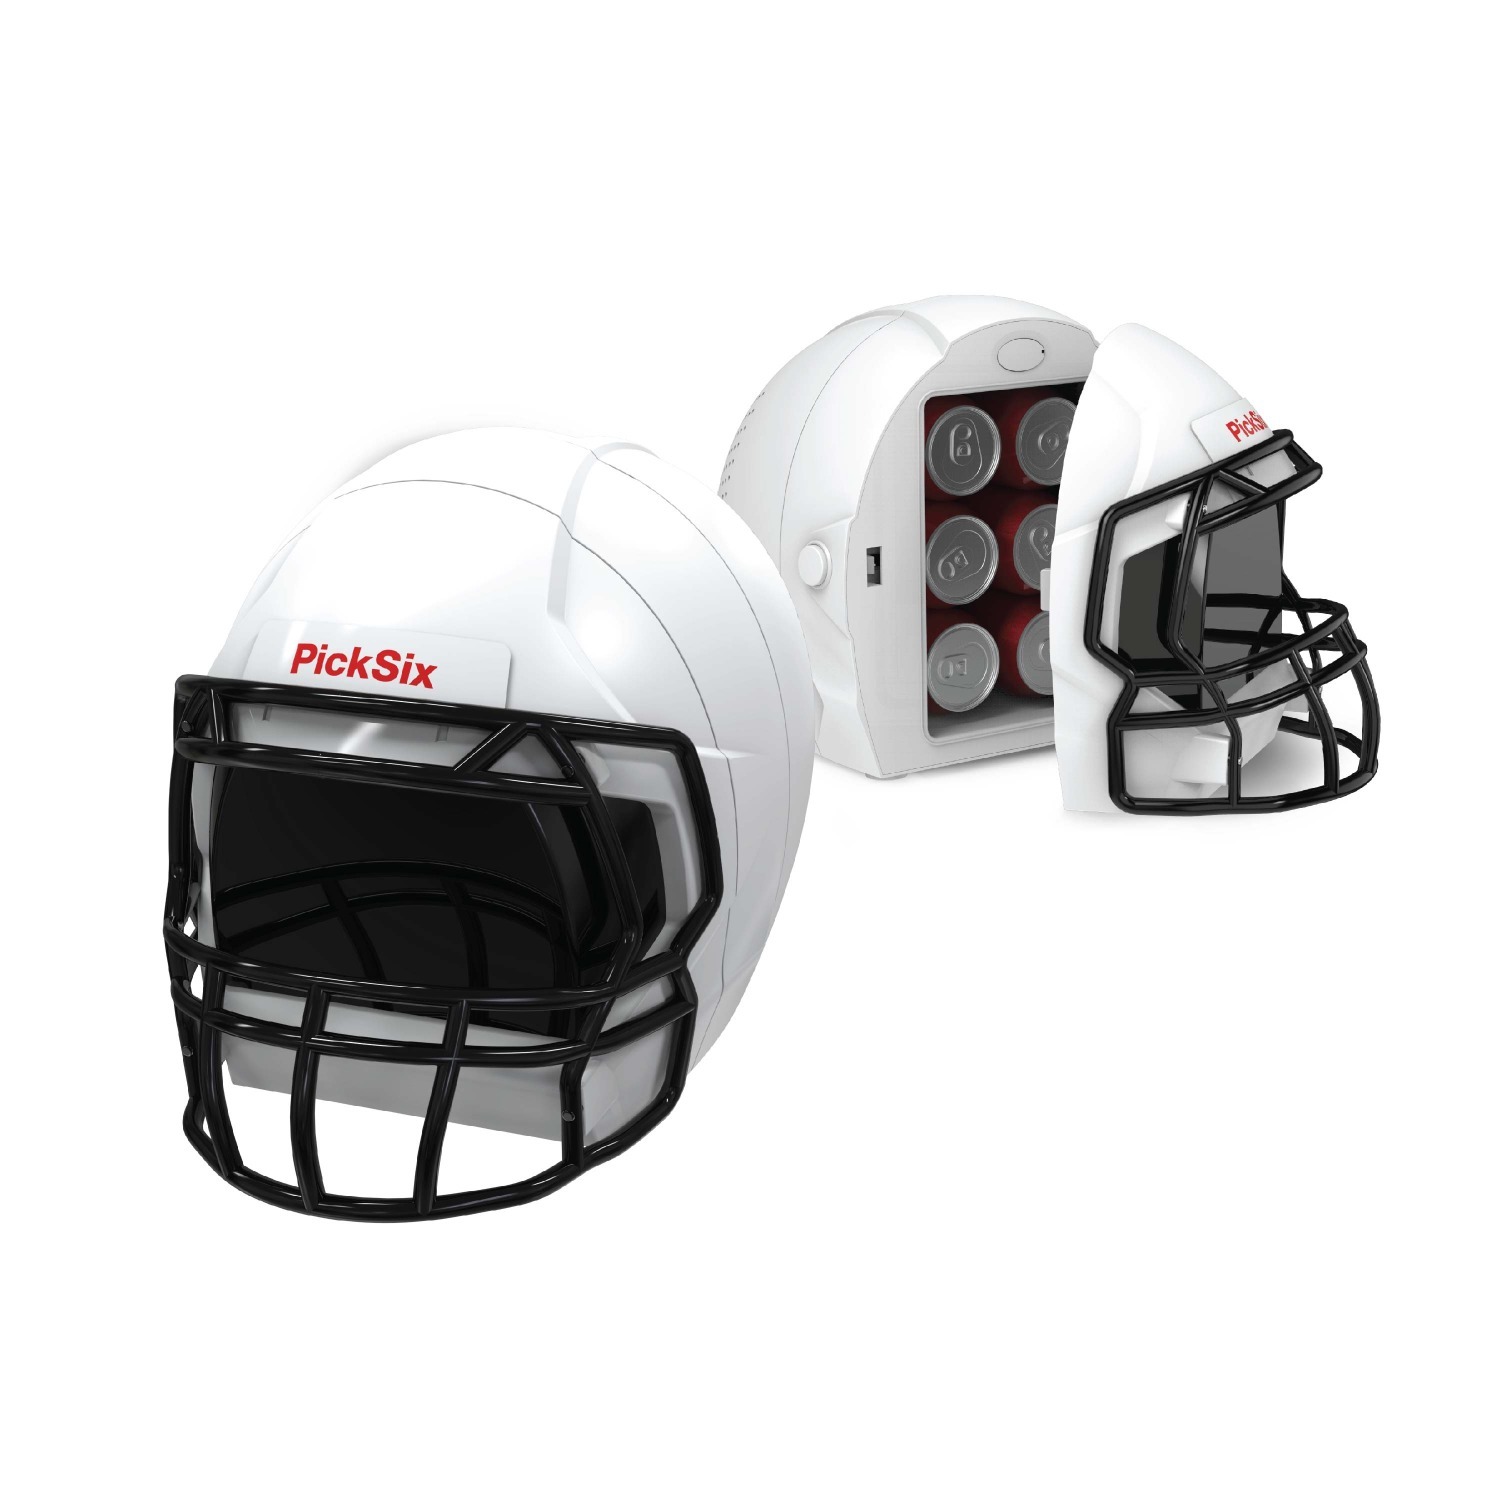 Ionchill PickSix Portable Football Helmet Cooler Mini Fridge (Fits 6 12oz cans) $39.88 + Free Shipping